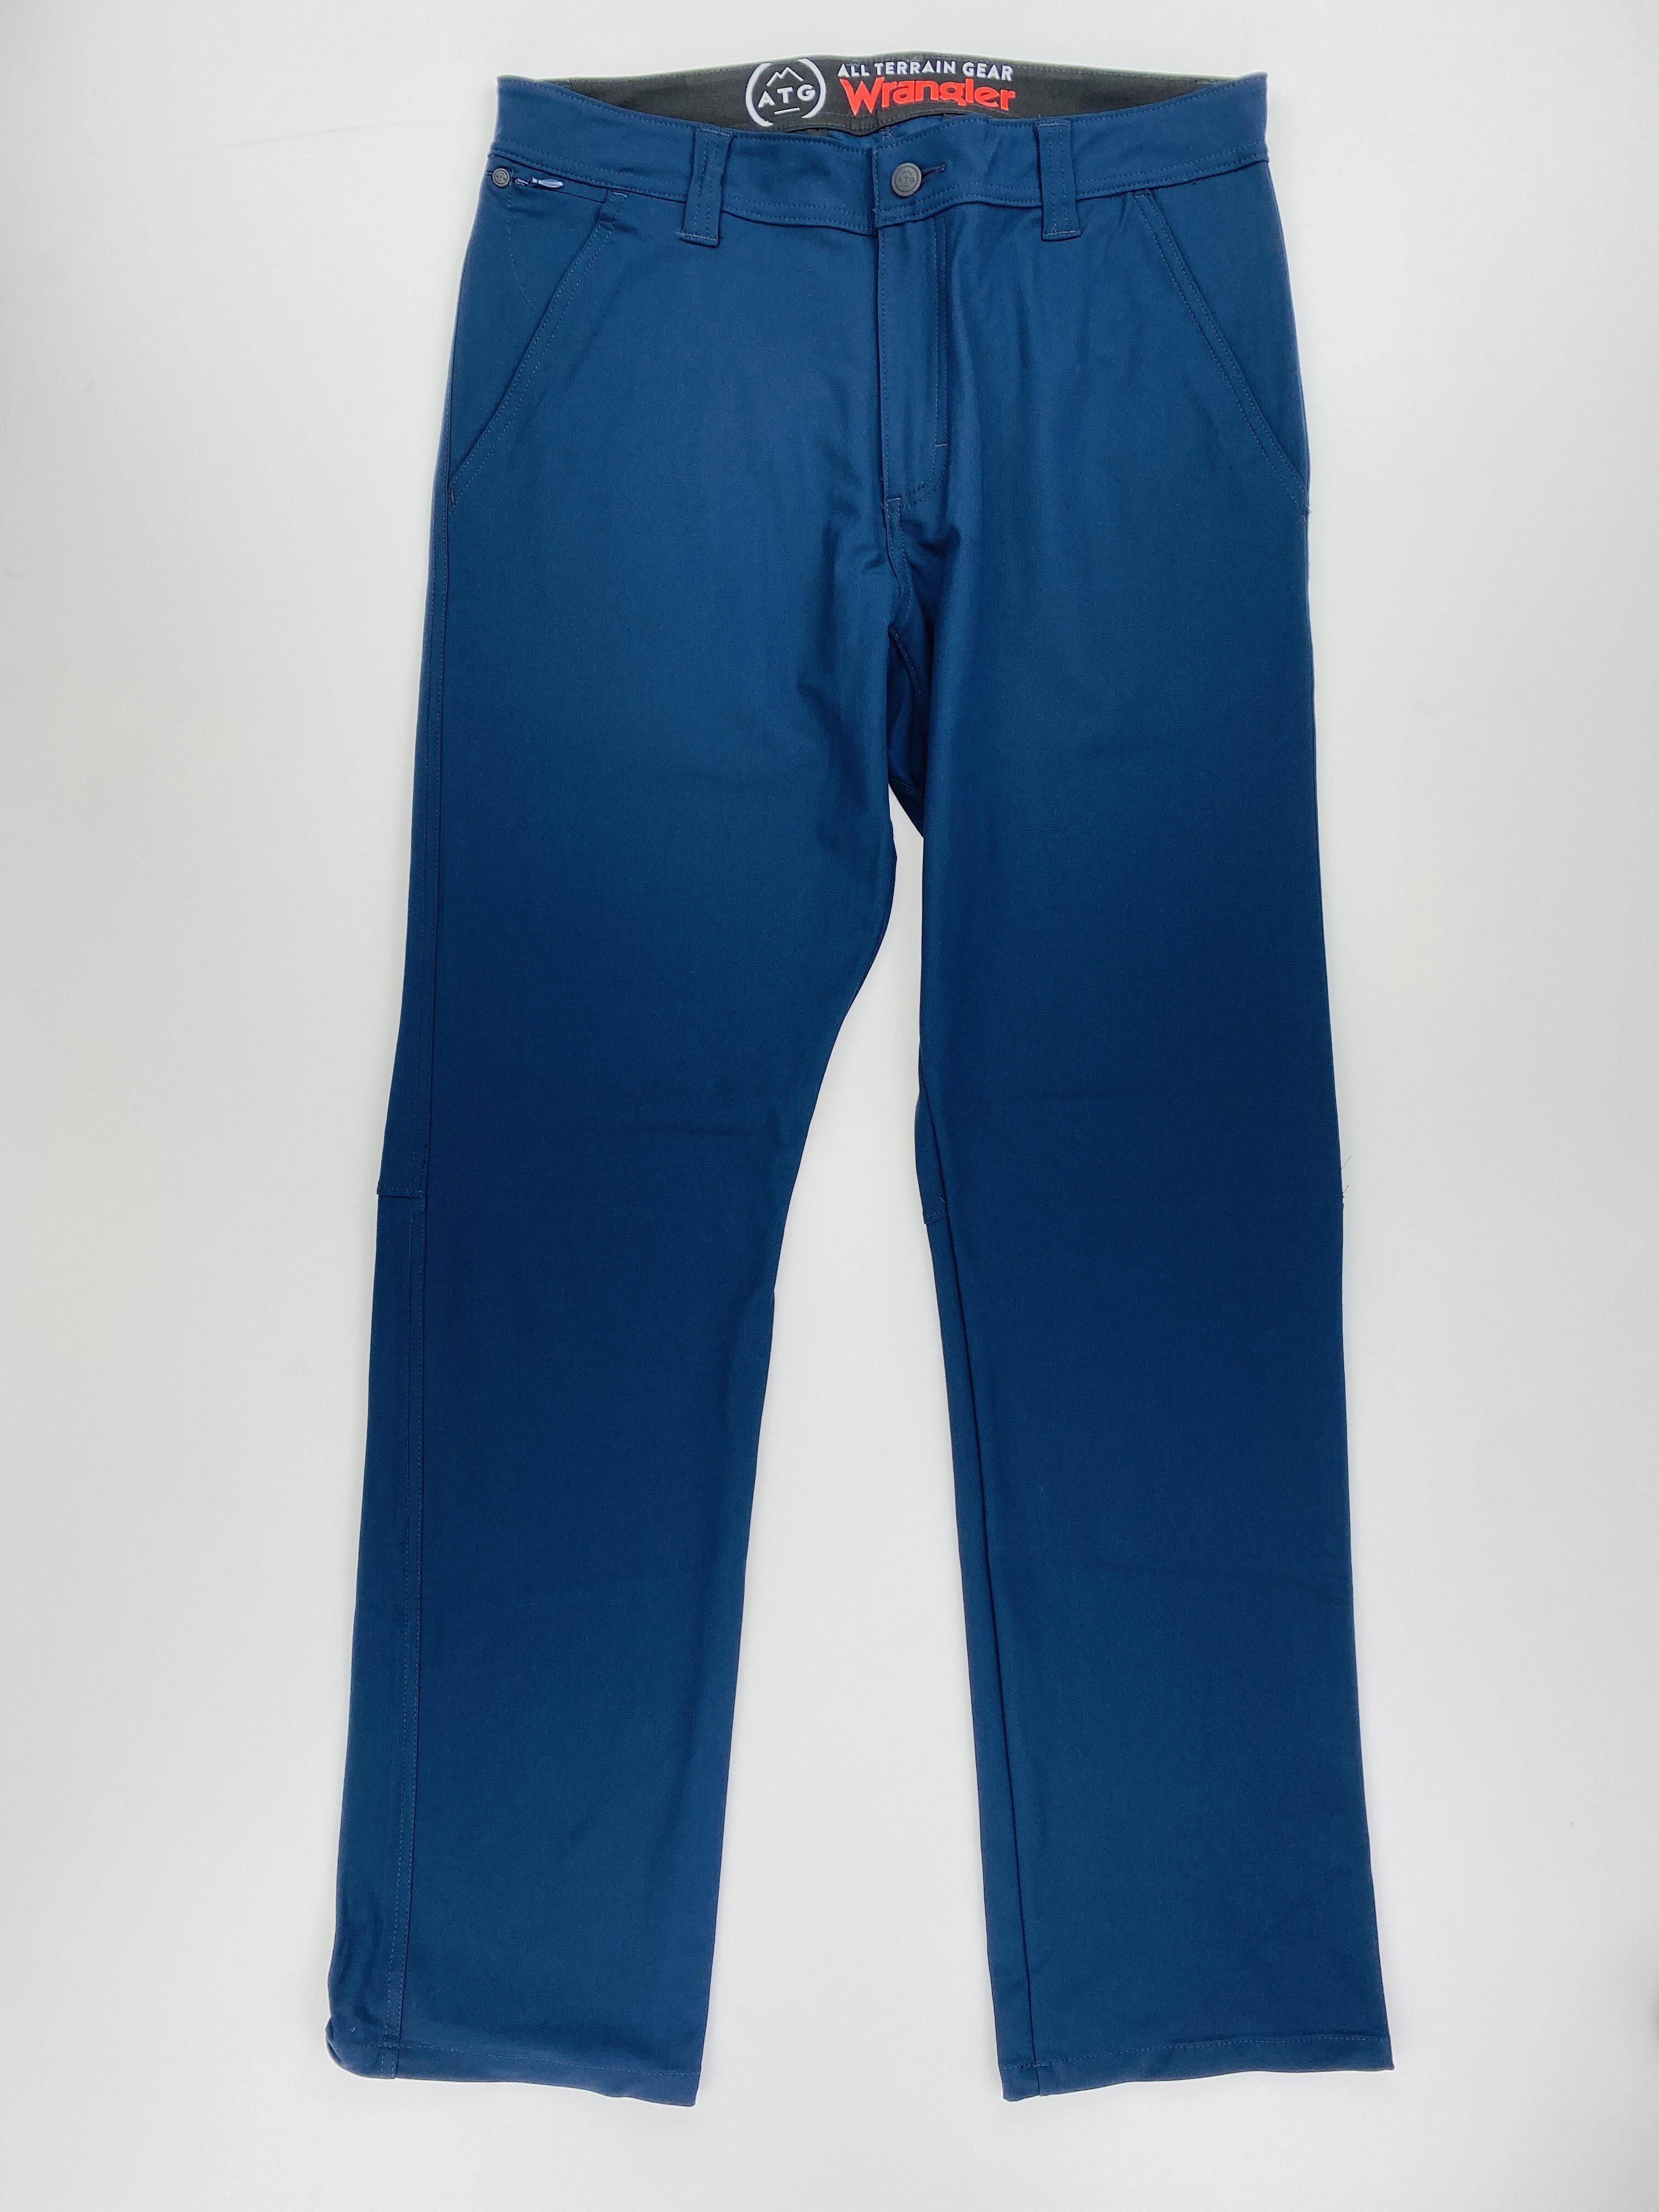 Wrangler Fwds Chino Pant - Seconde main Pantalon randonnée femme - Bleu - US 28 | Hardloop